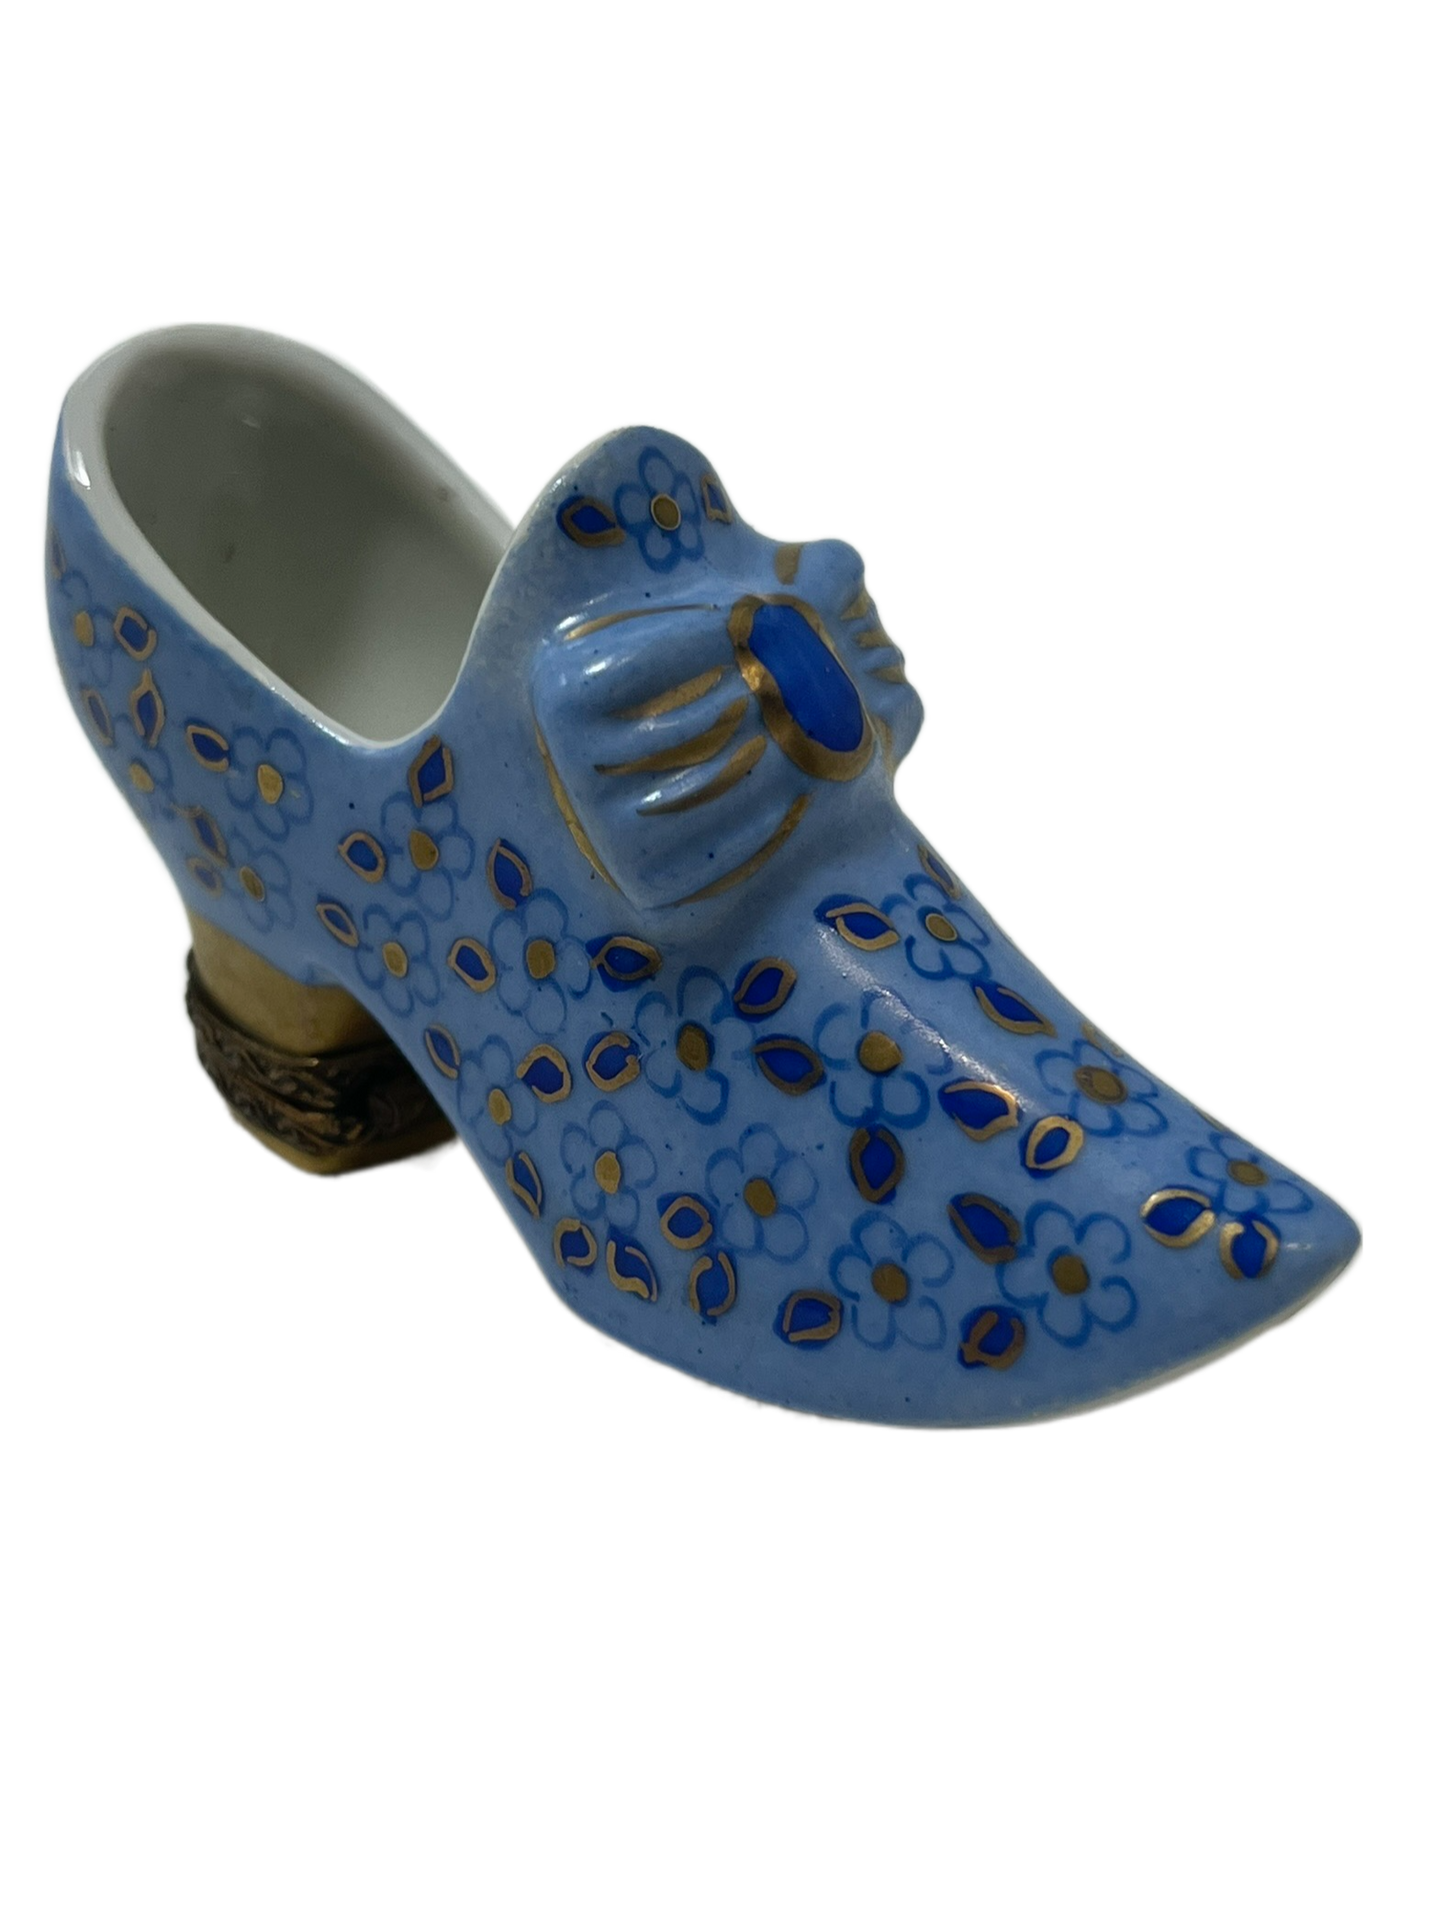 Blue Elegance: Limoges Box - Light Blue Women's Shoe with Royal Blue and Gold Details